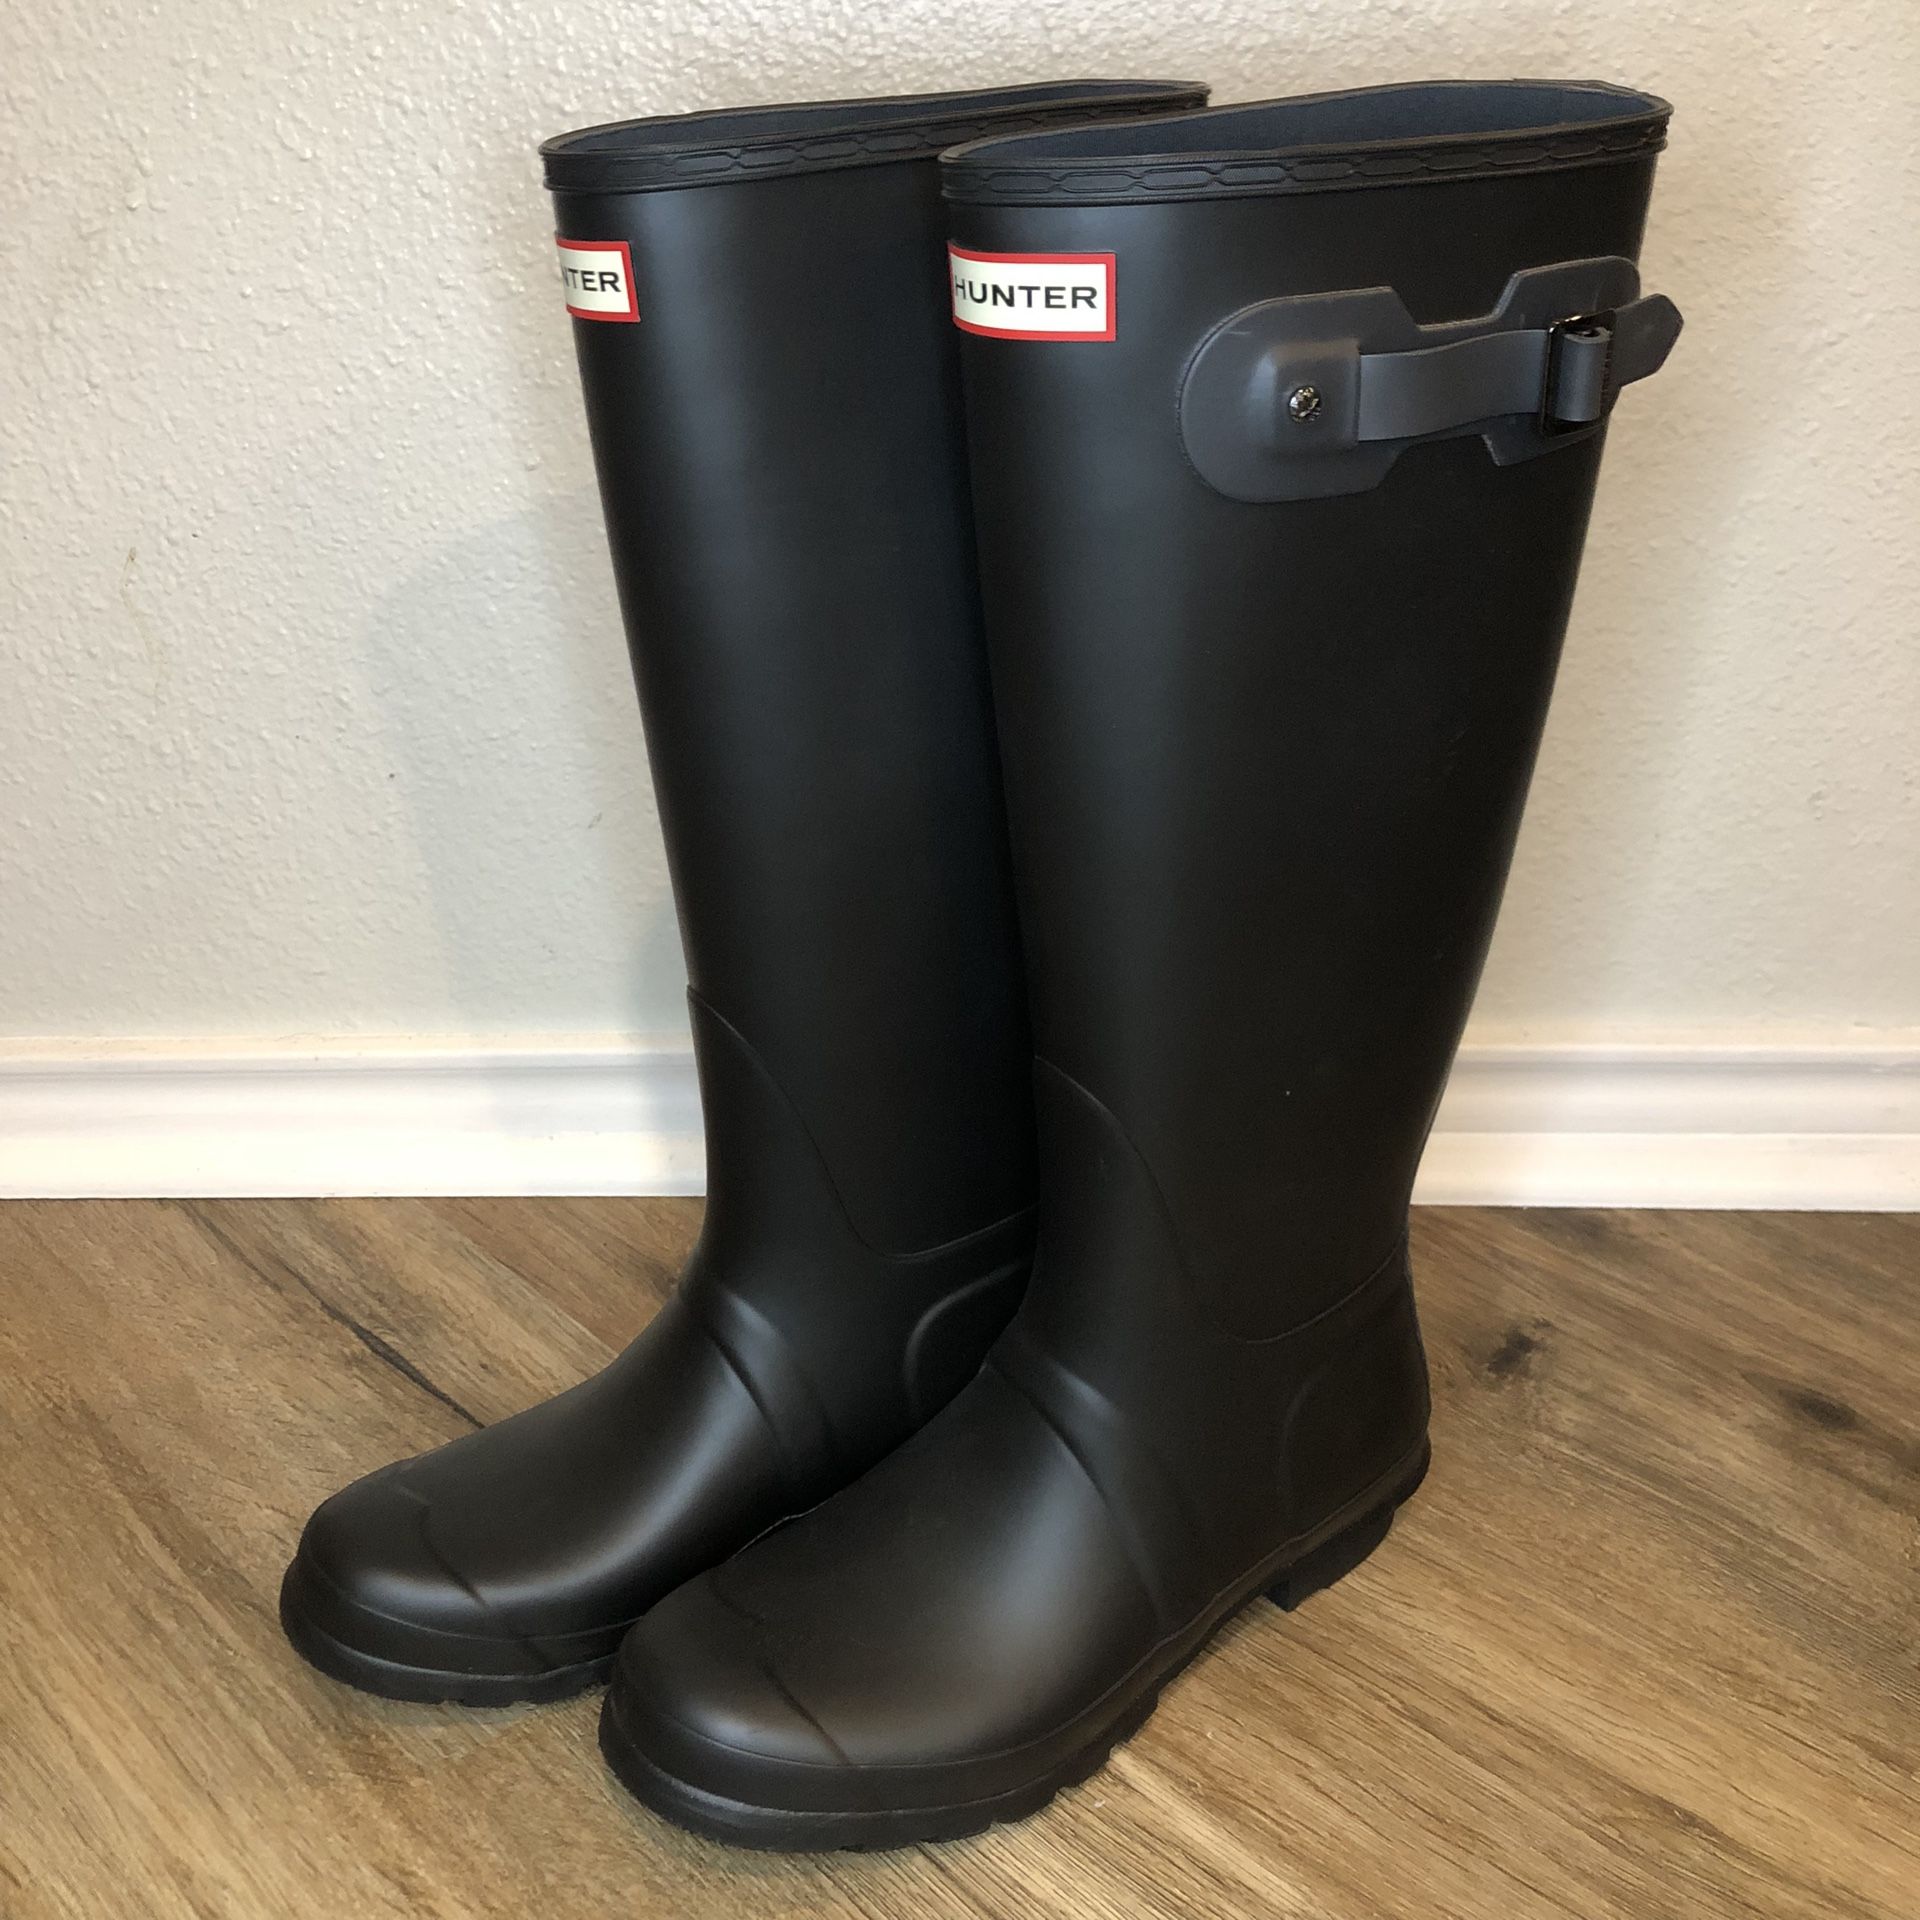 New Hunter Women's Black Original Tall Rain Boots SIZE 10